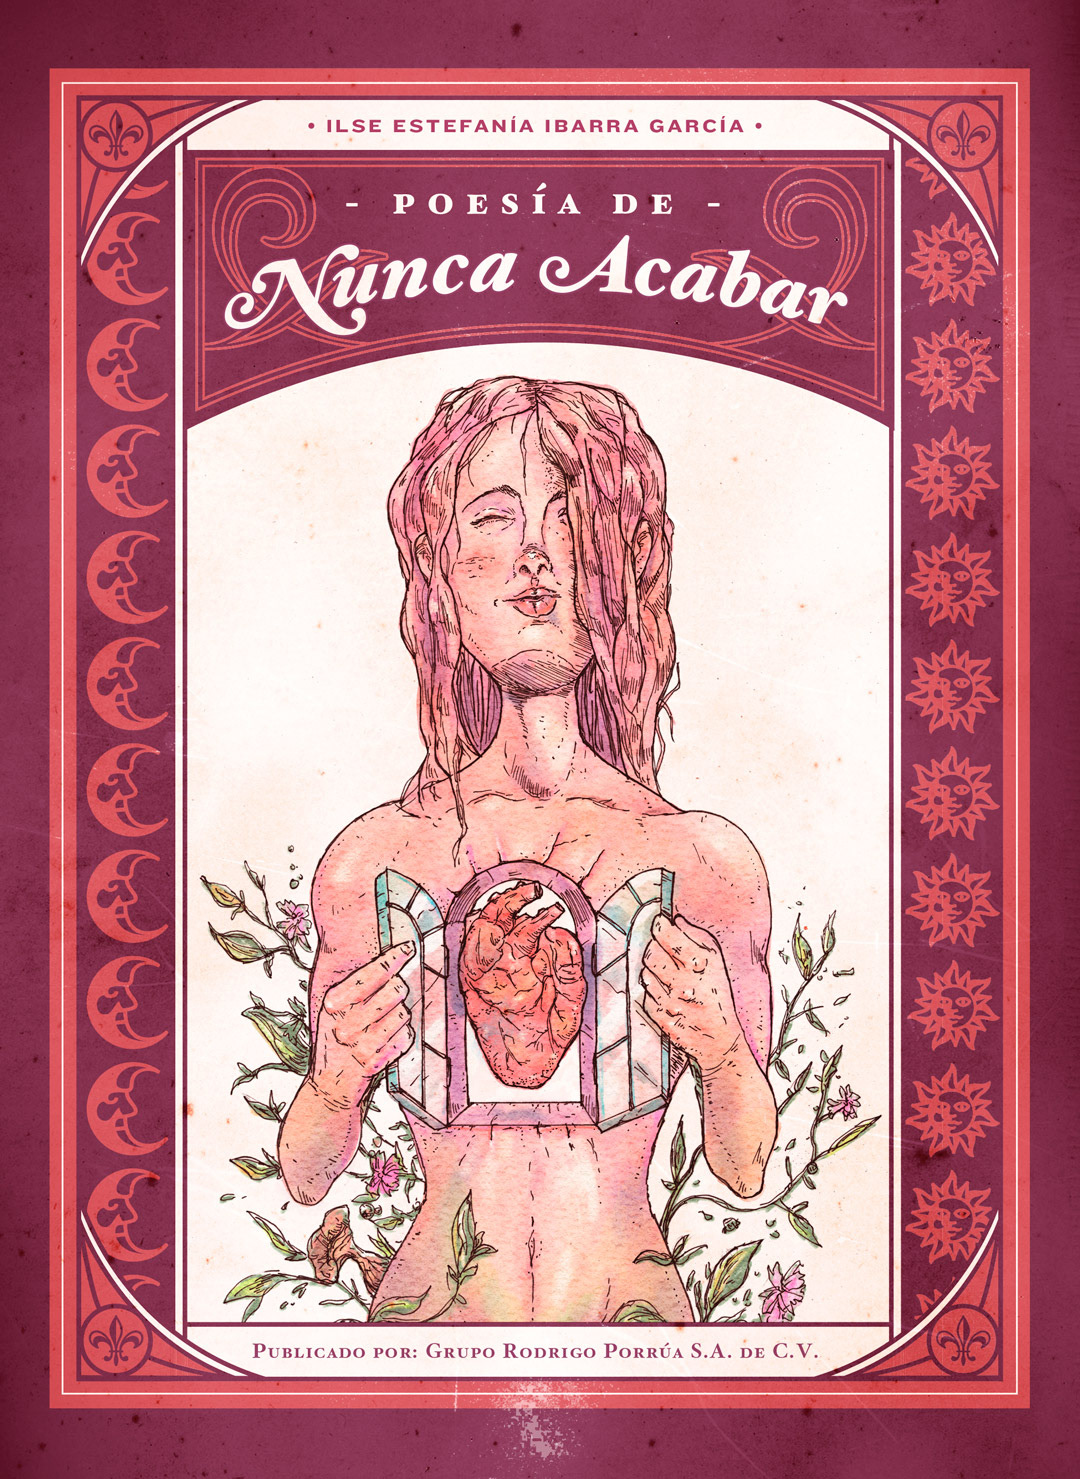 poesia cover Cover page cover illustration cover design poesia de nunca corazon heart girl Love